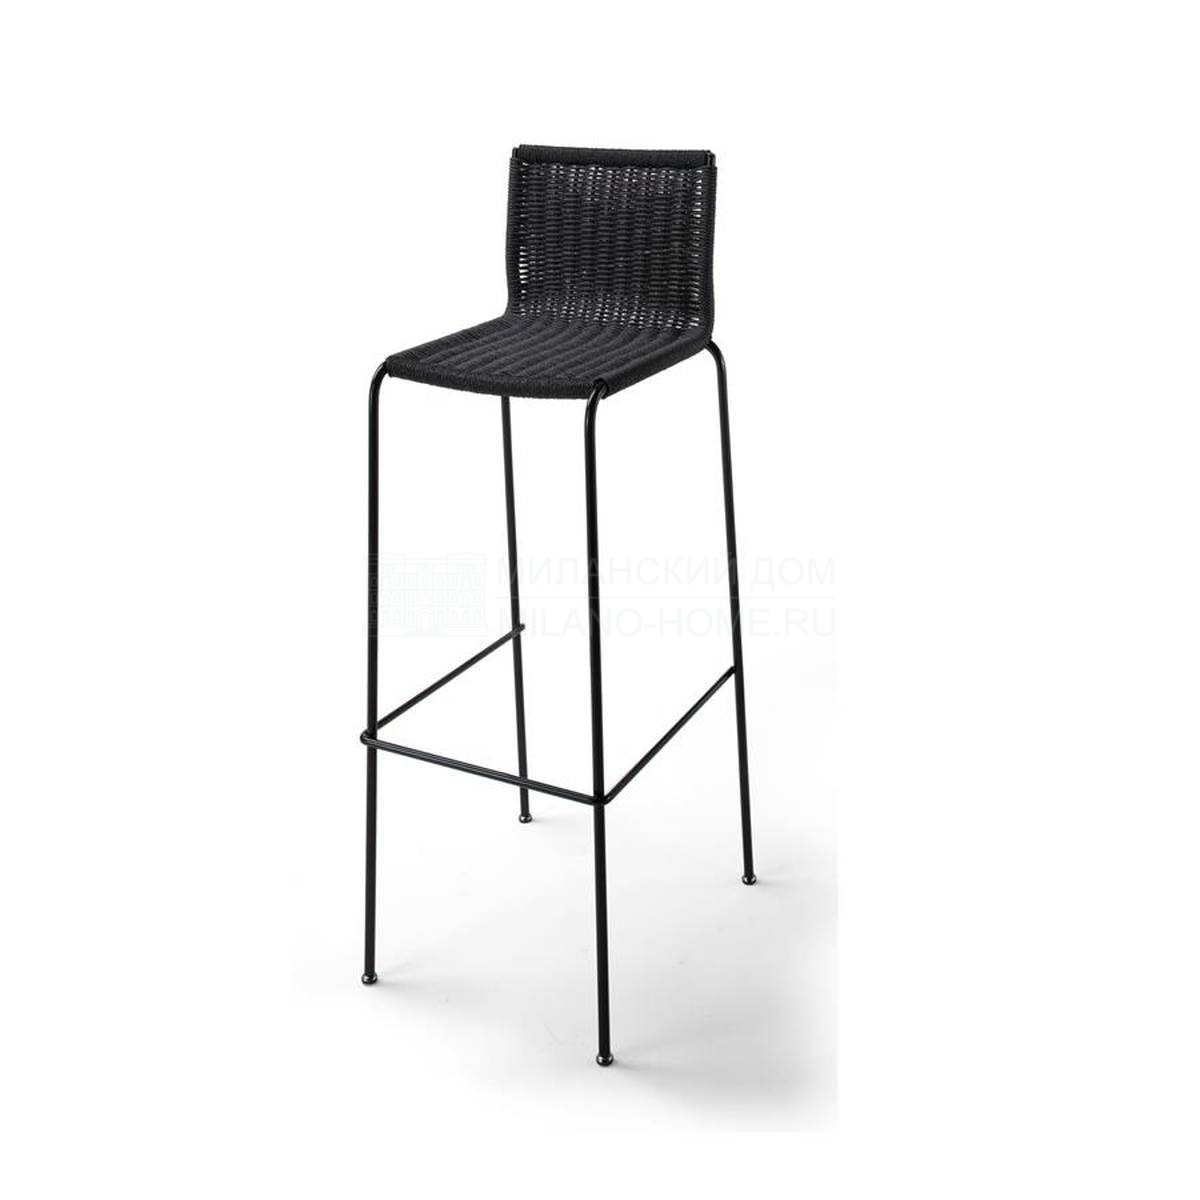 Барный стул Laguna/stool из Италии фабрики ASTER Cucine